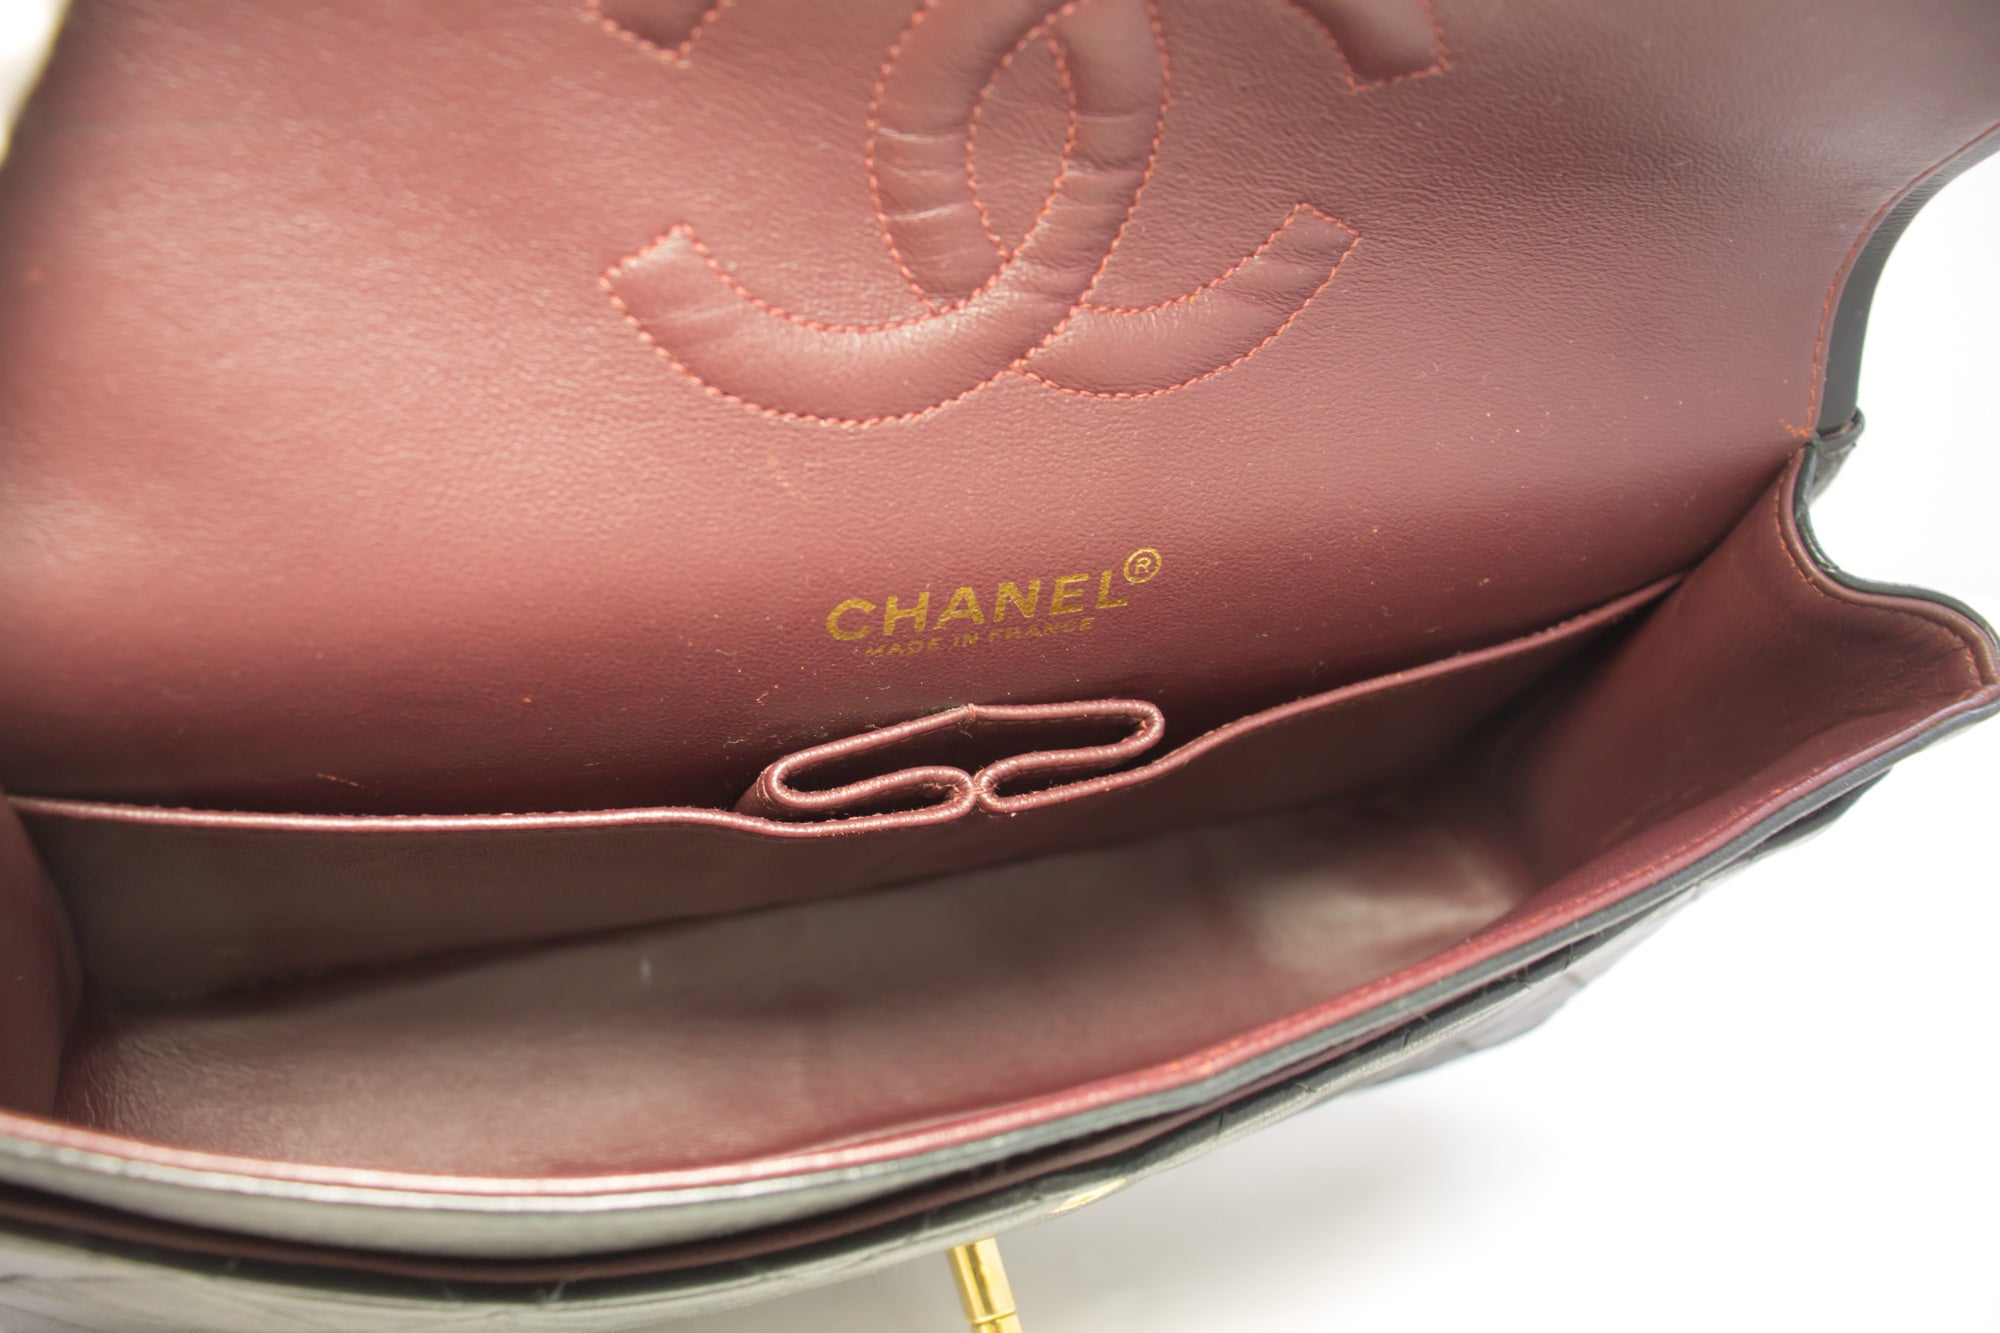 CHANEL 2.55 Double Flap Medium Chain Shoulder Bag Black Lambskin i51 –  hannari-shop